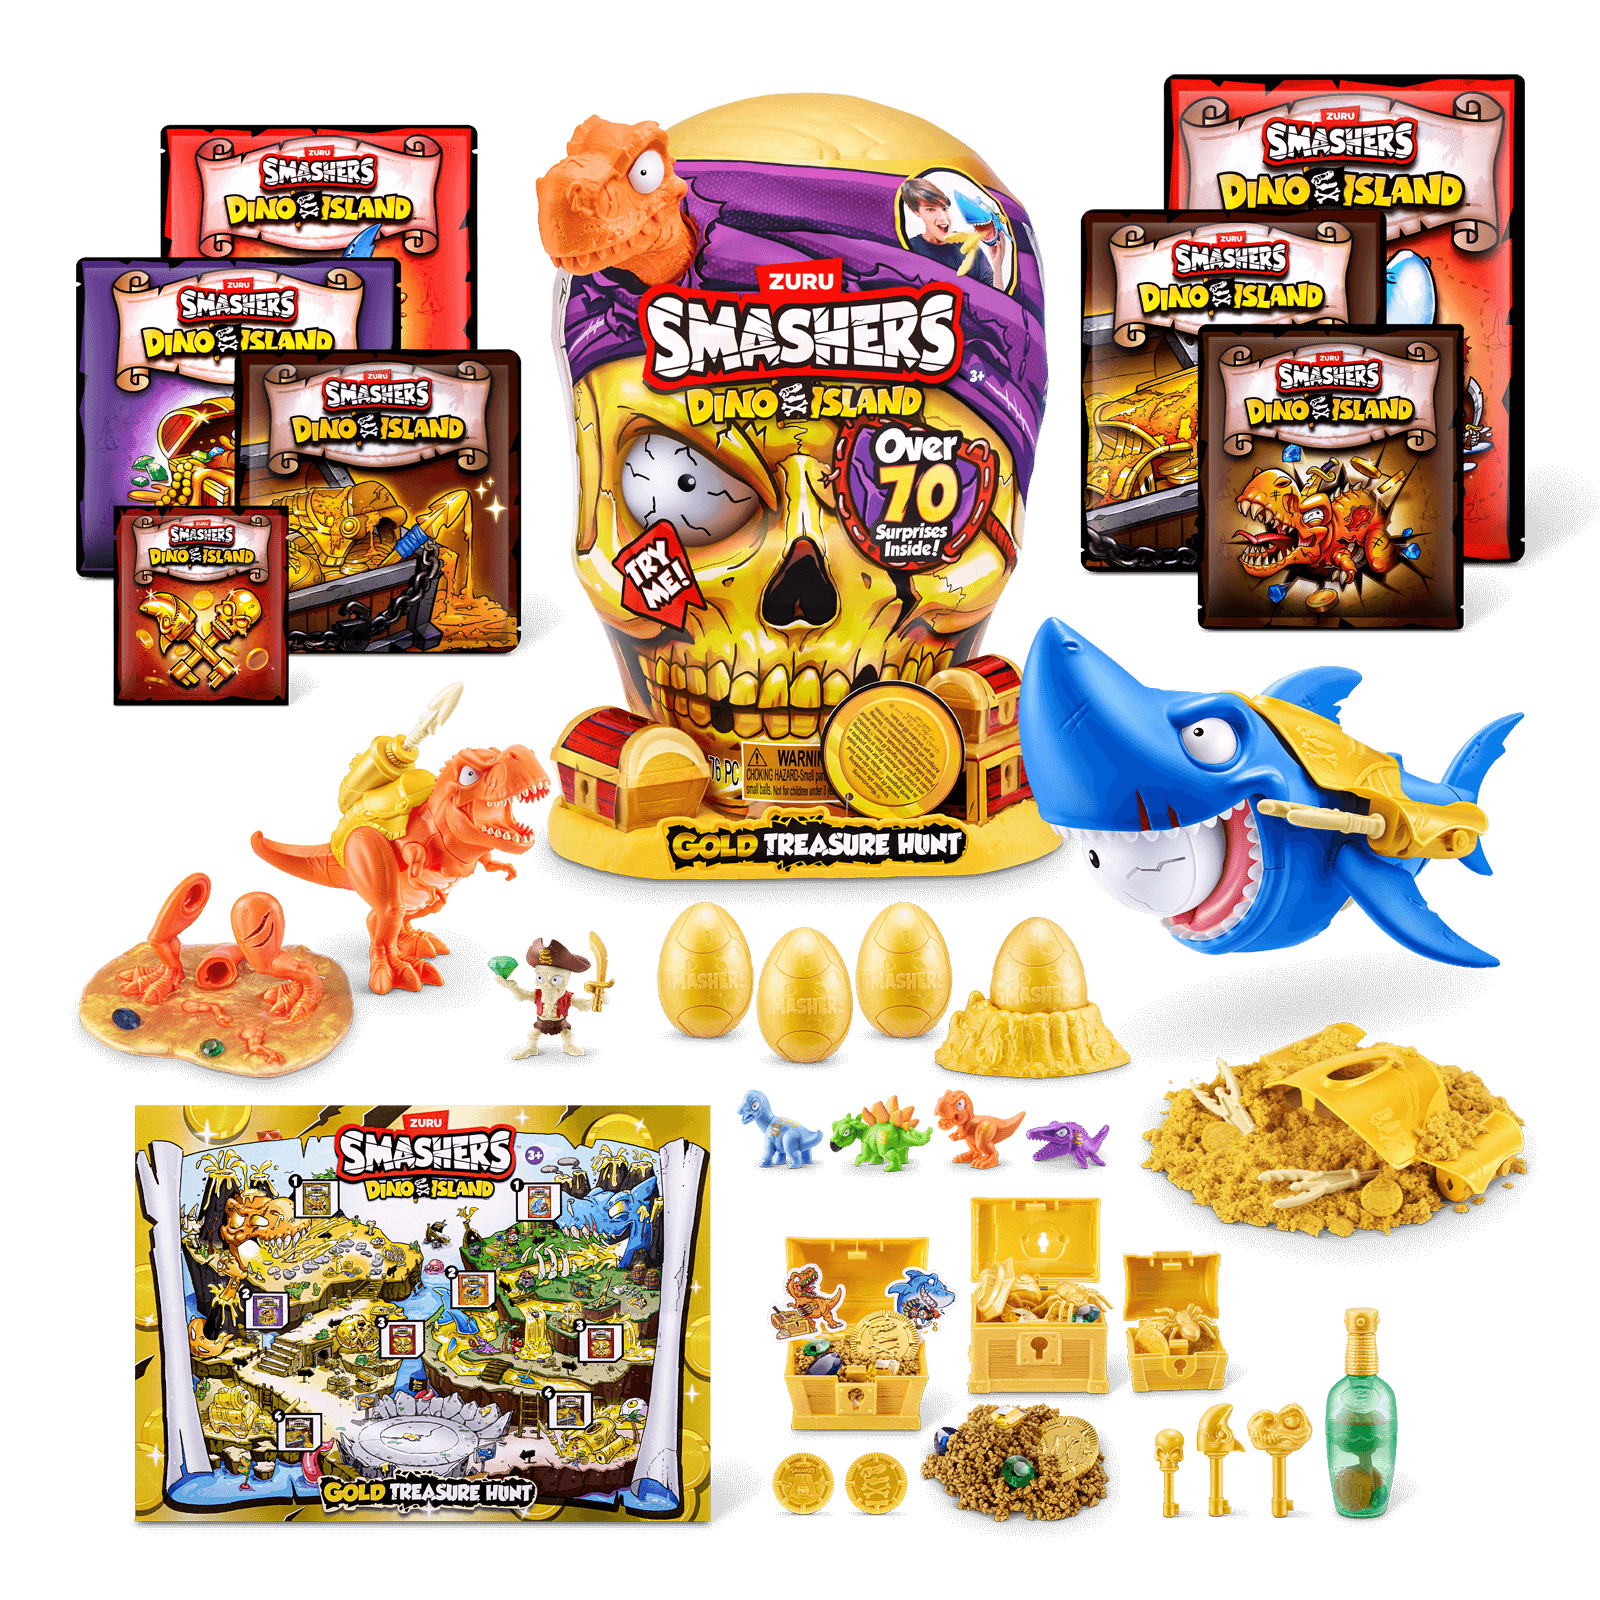 Smashers Dino Island Gold Treasure Hunt